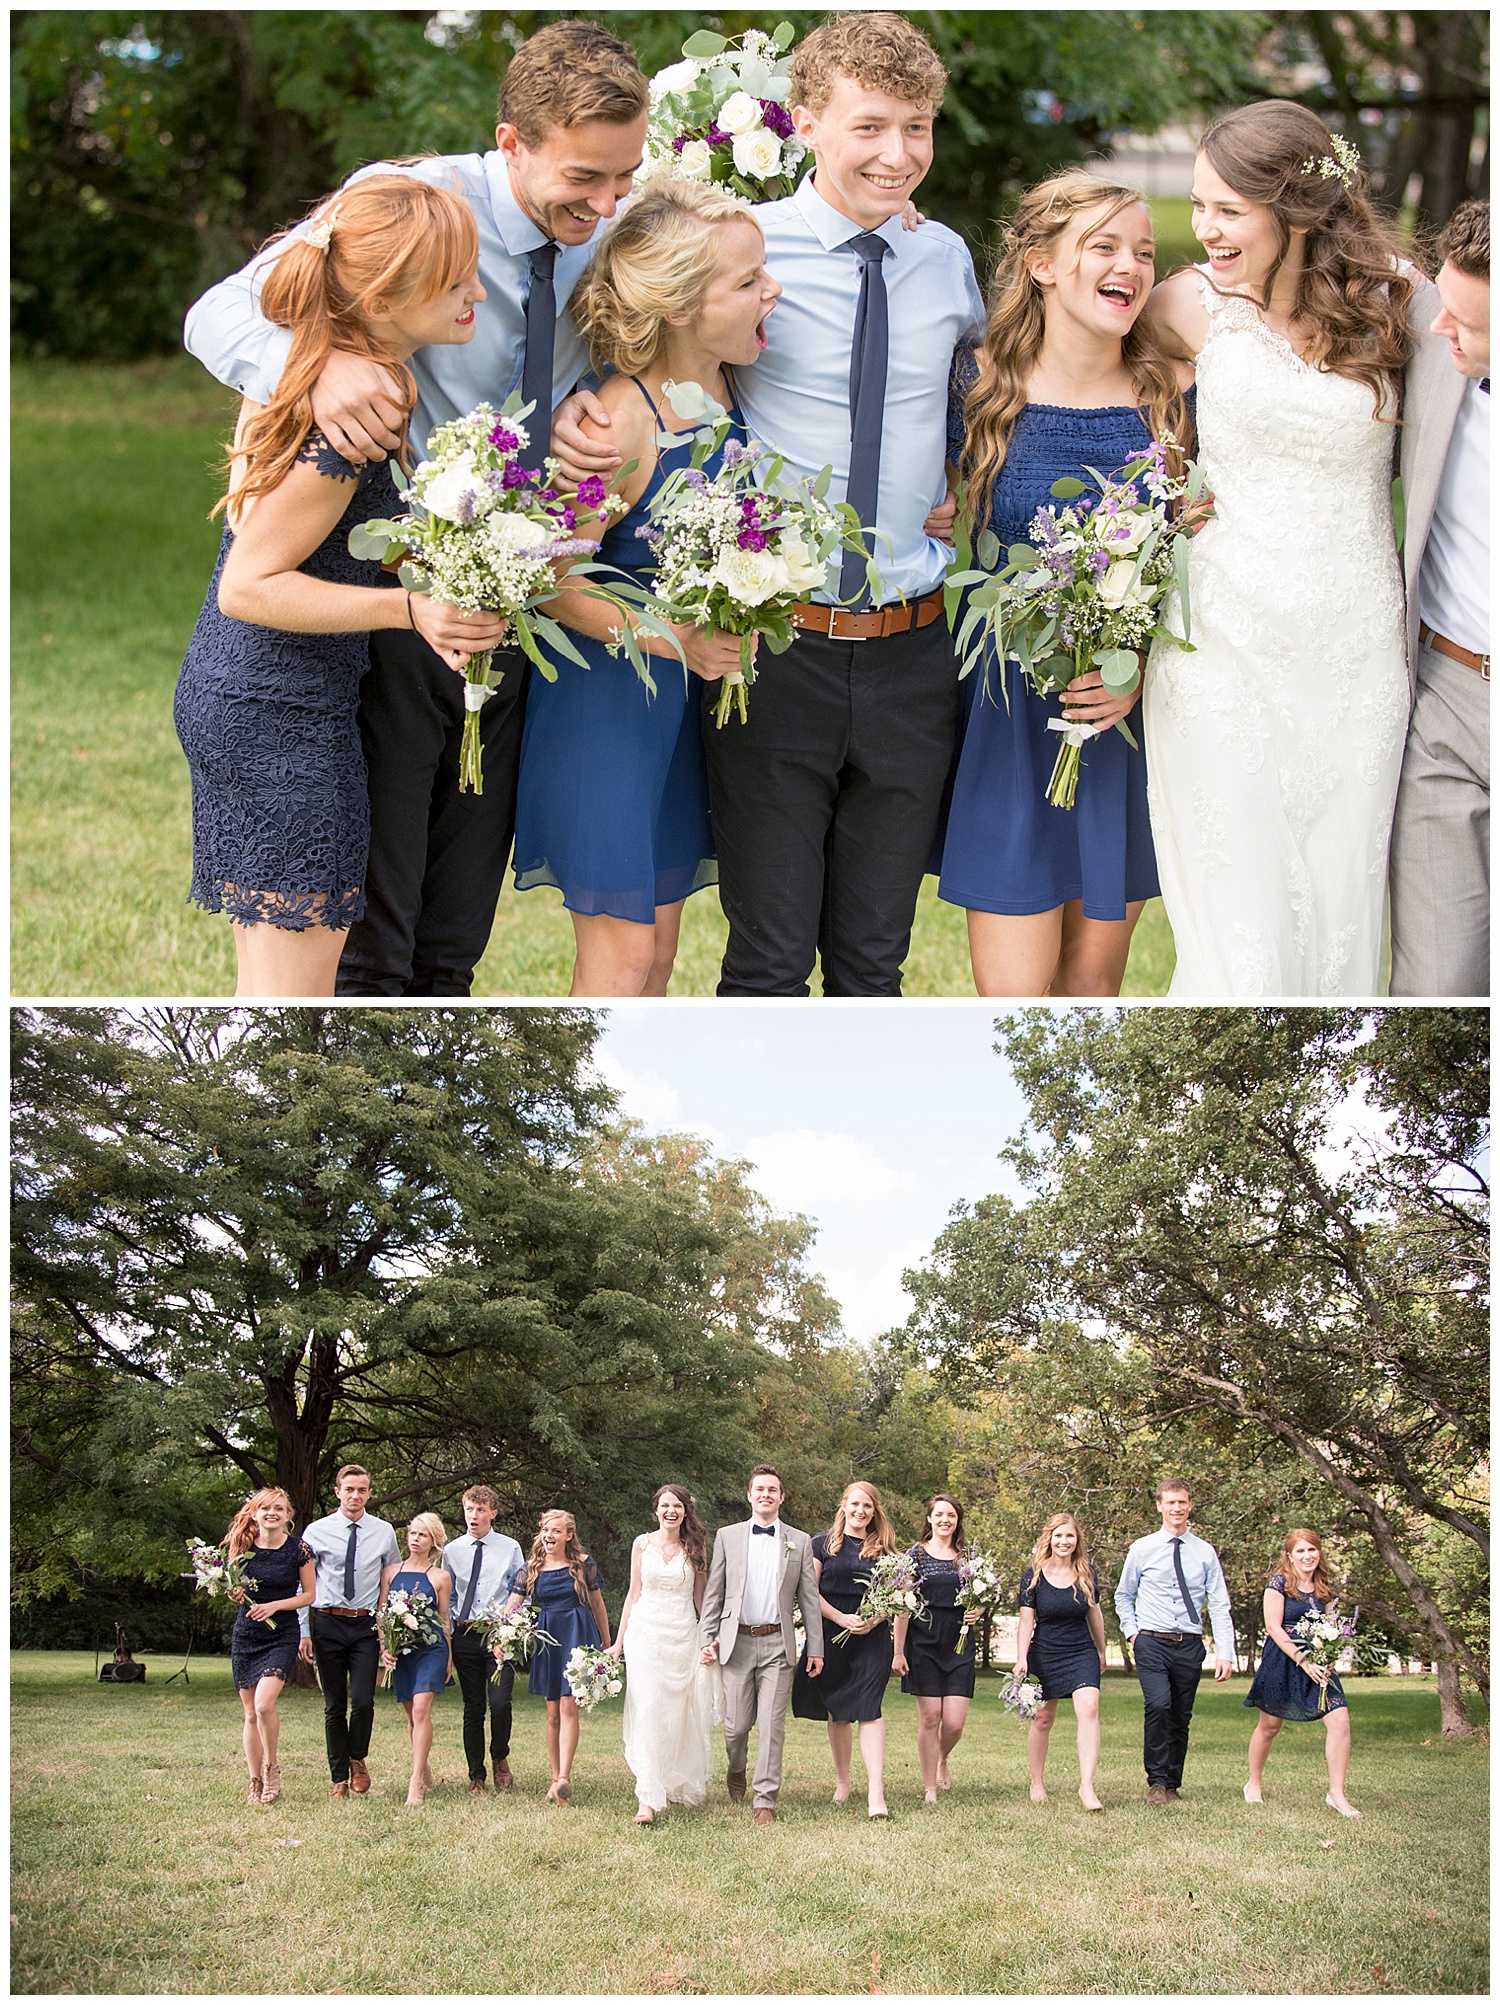 Fun Wedding Photography | Bethany and Jono's Intimate DIY Wedding | Colorado Springs Wedding Photographer | Farm Wedding Photographer | Apollo Fields Wedding Photojournalism